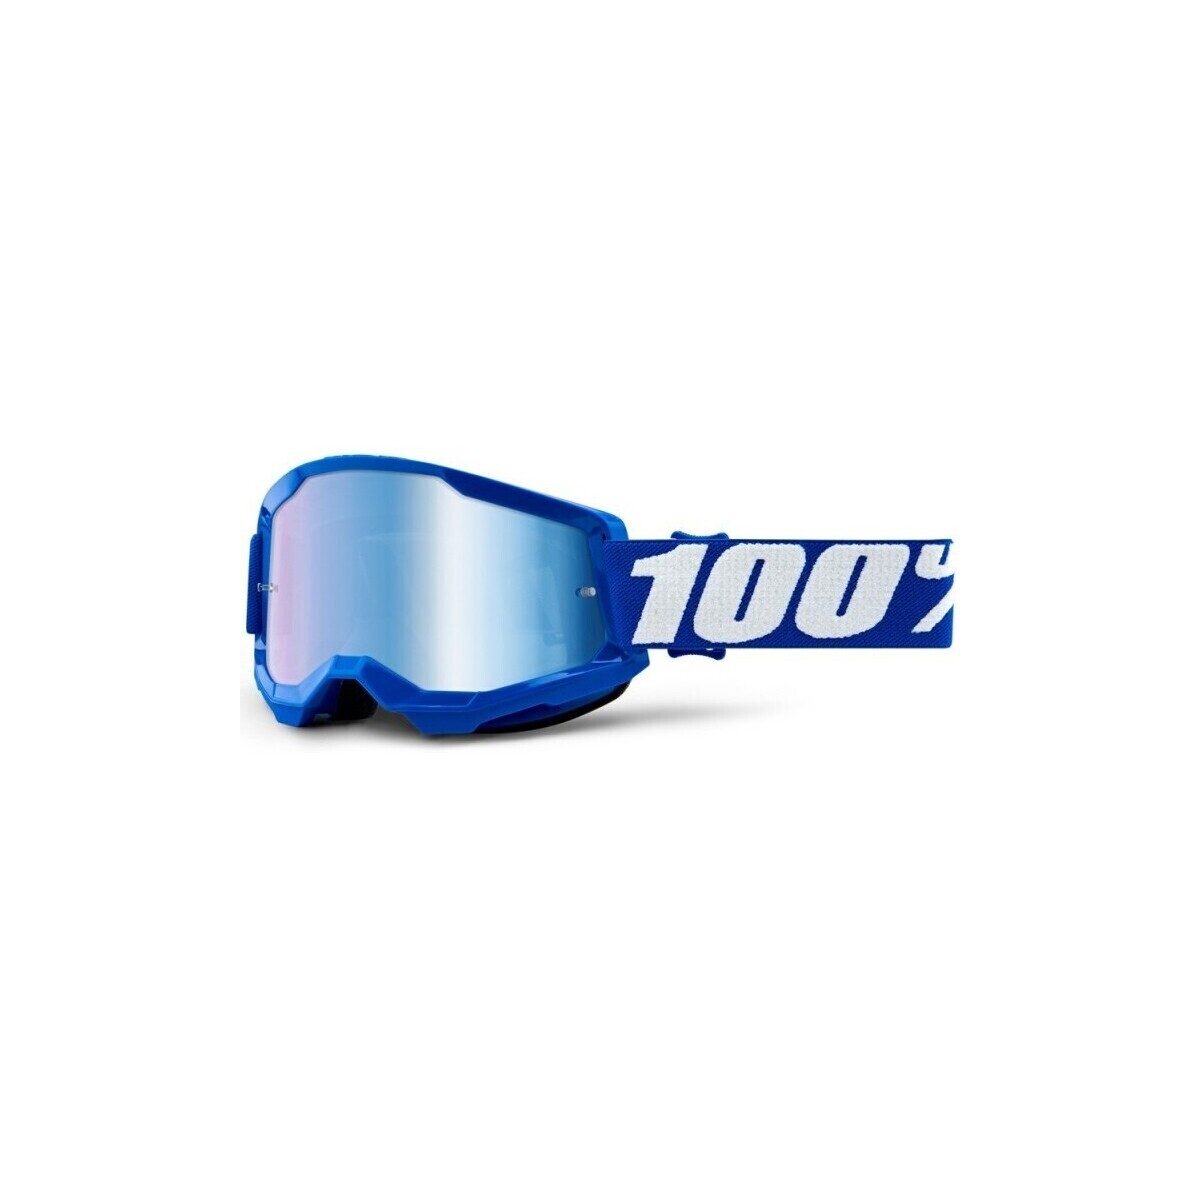 Accessoires Accessoires sport 100 % Feminin 100% Masque VTT Strata 2 - Blue/Mirror B Bleu